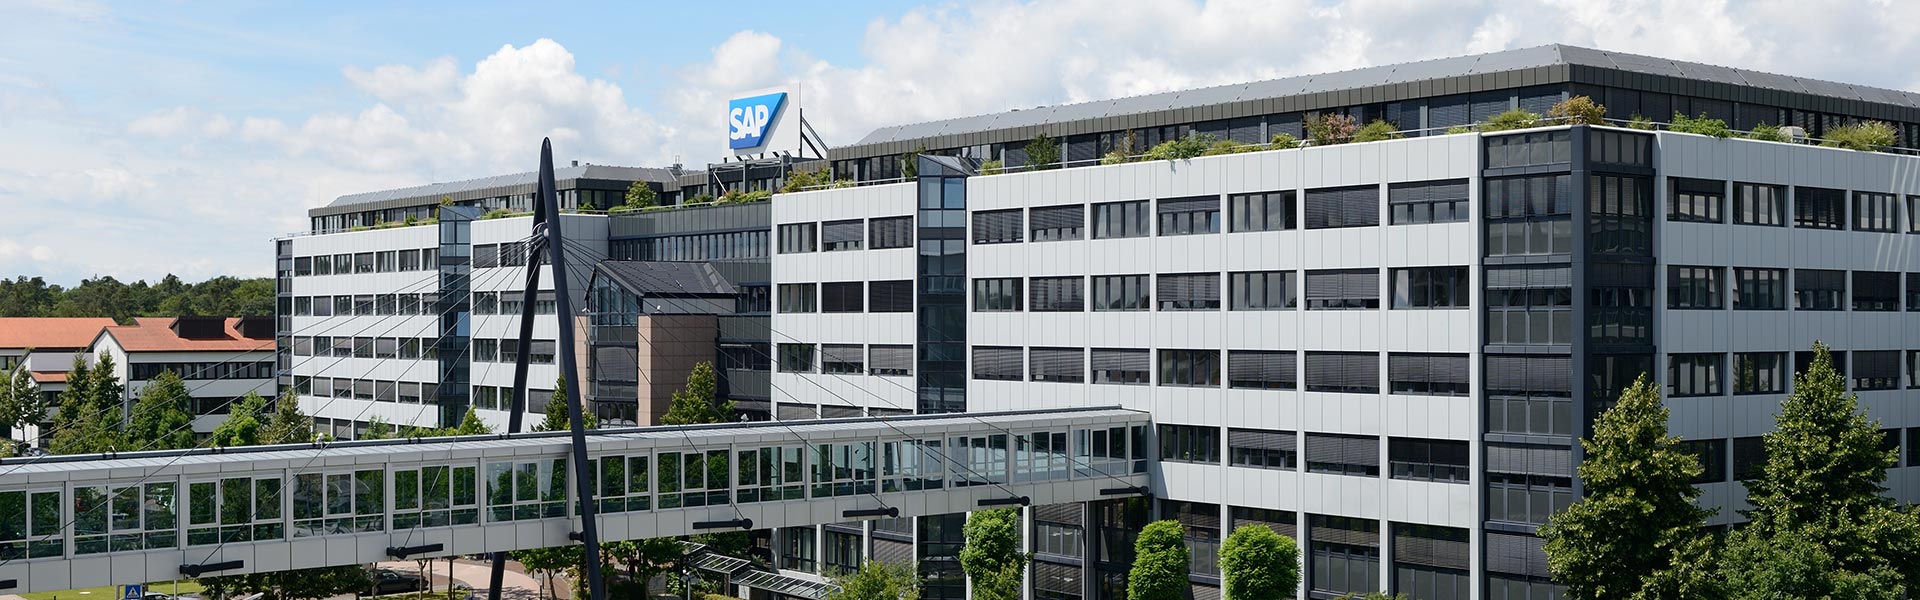 SAP Announces Dominik Asam as New CFO